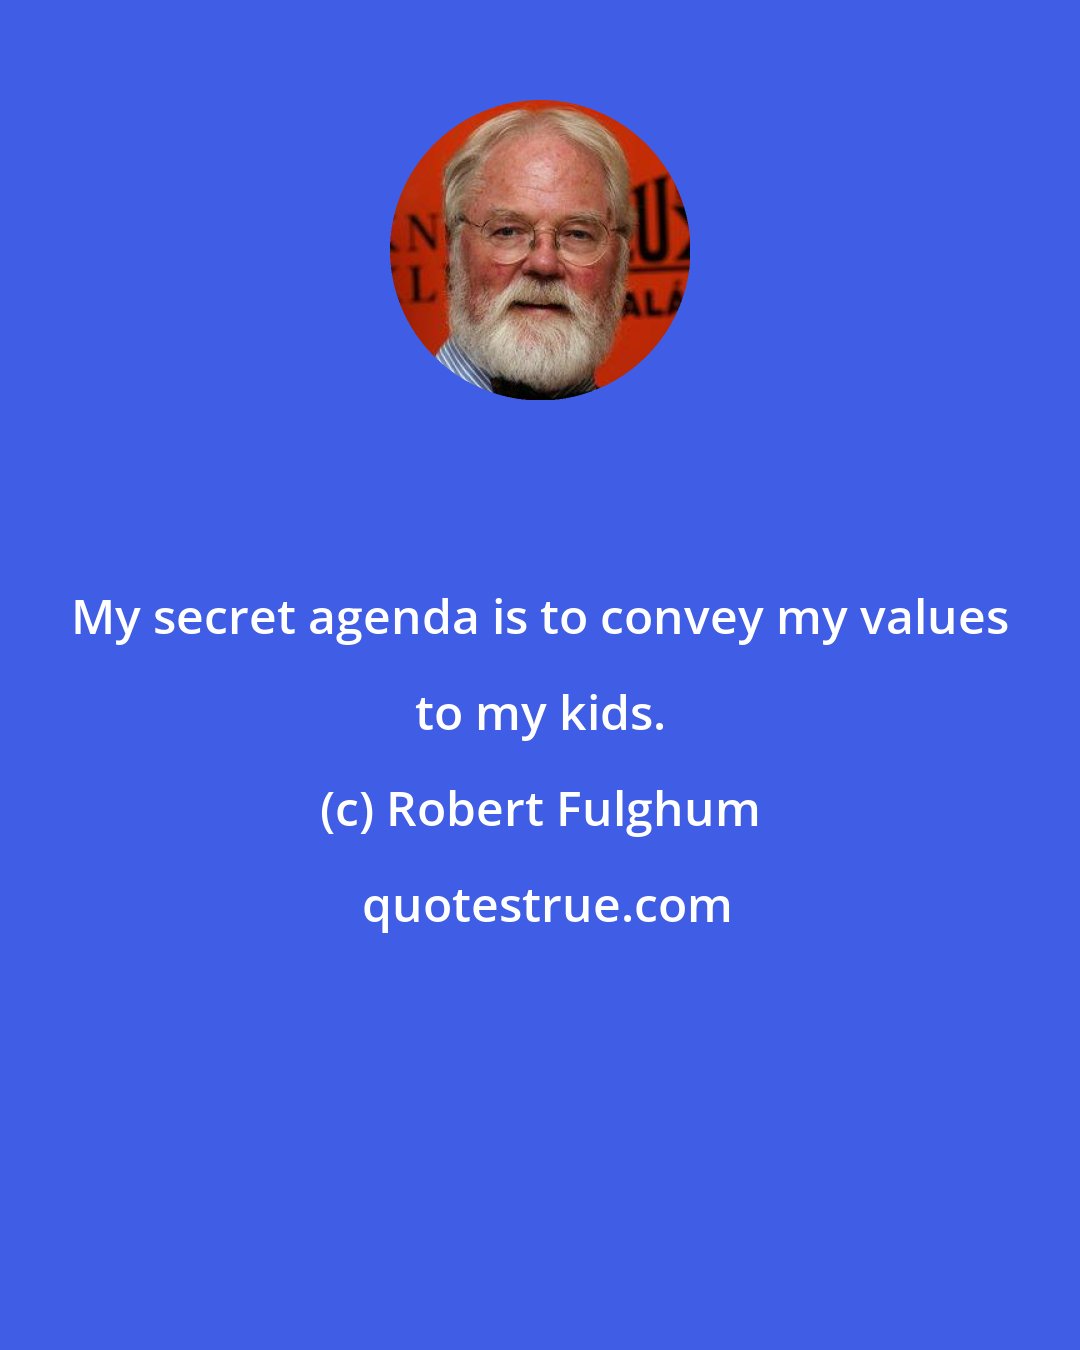 Robert Fulghum: My secret agenda is to convey my values to my kids.